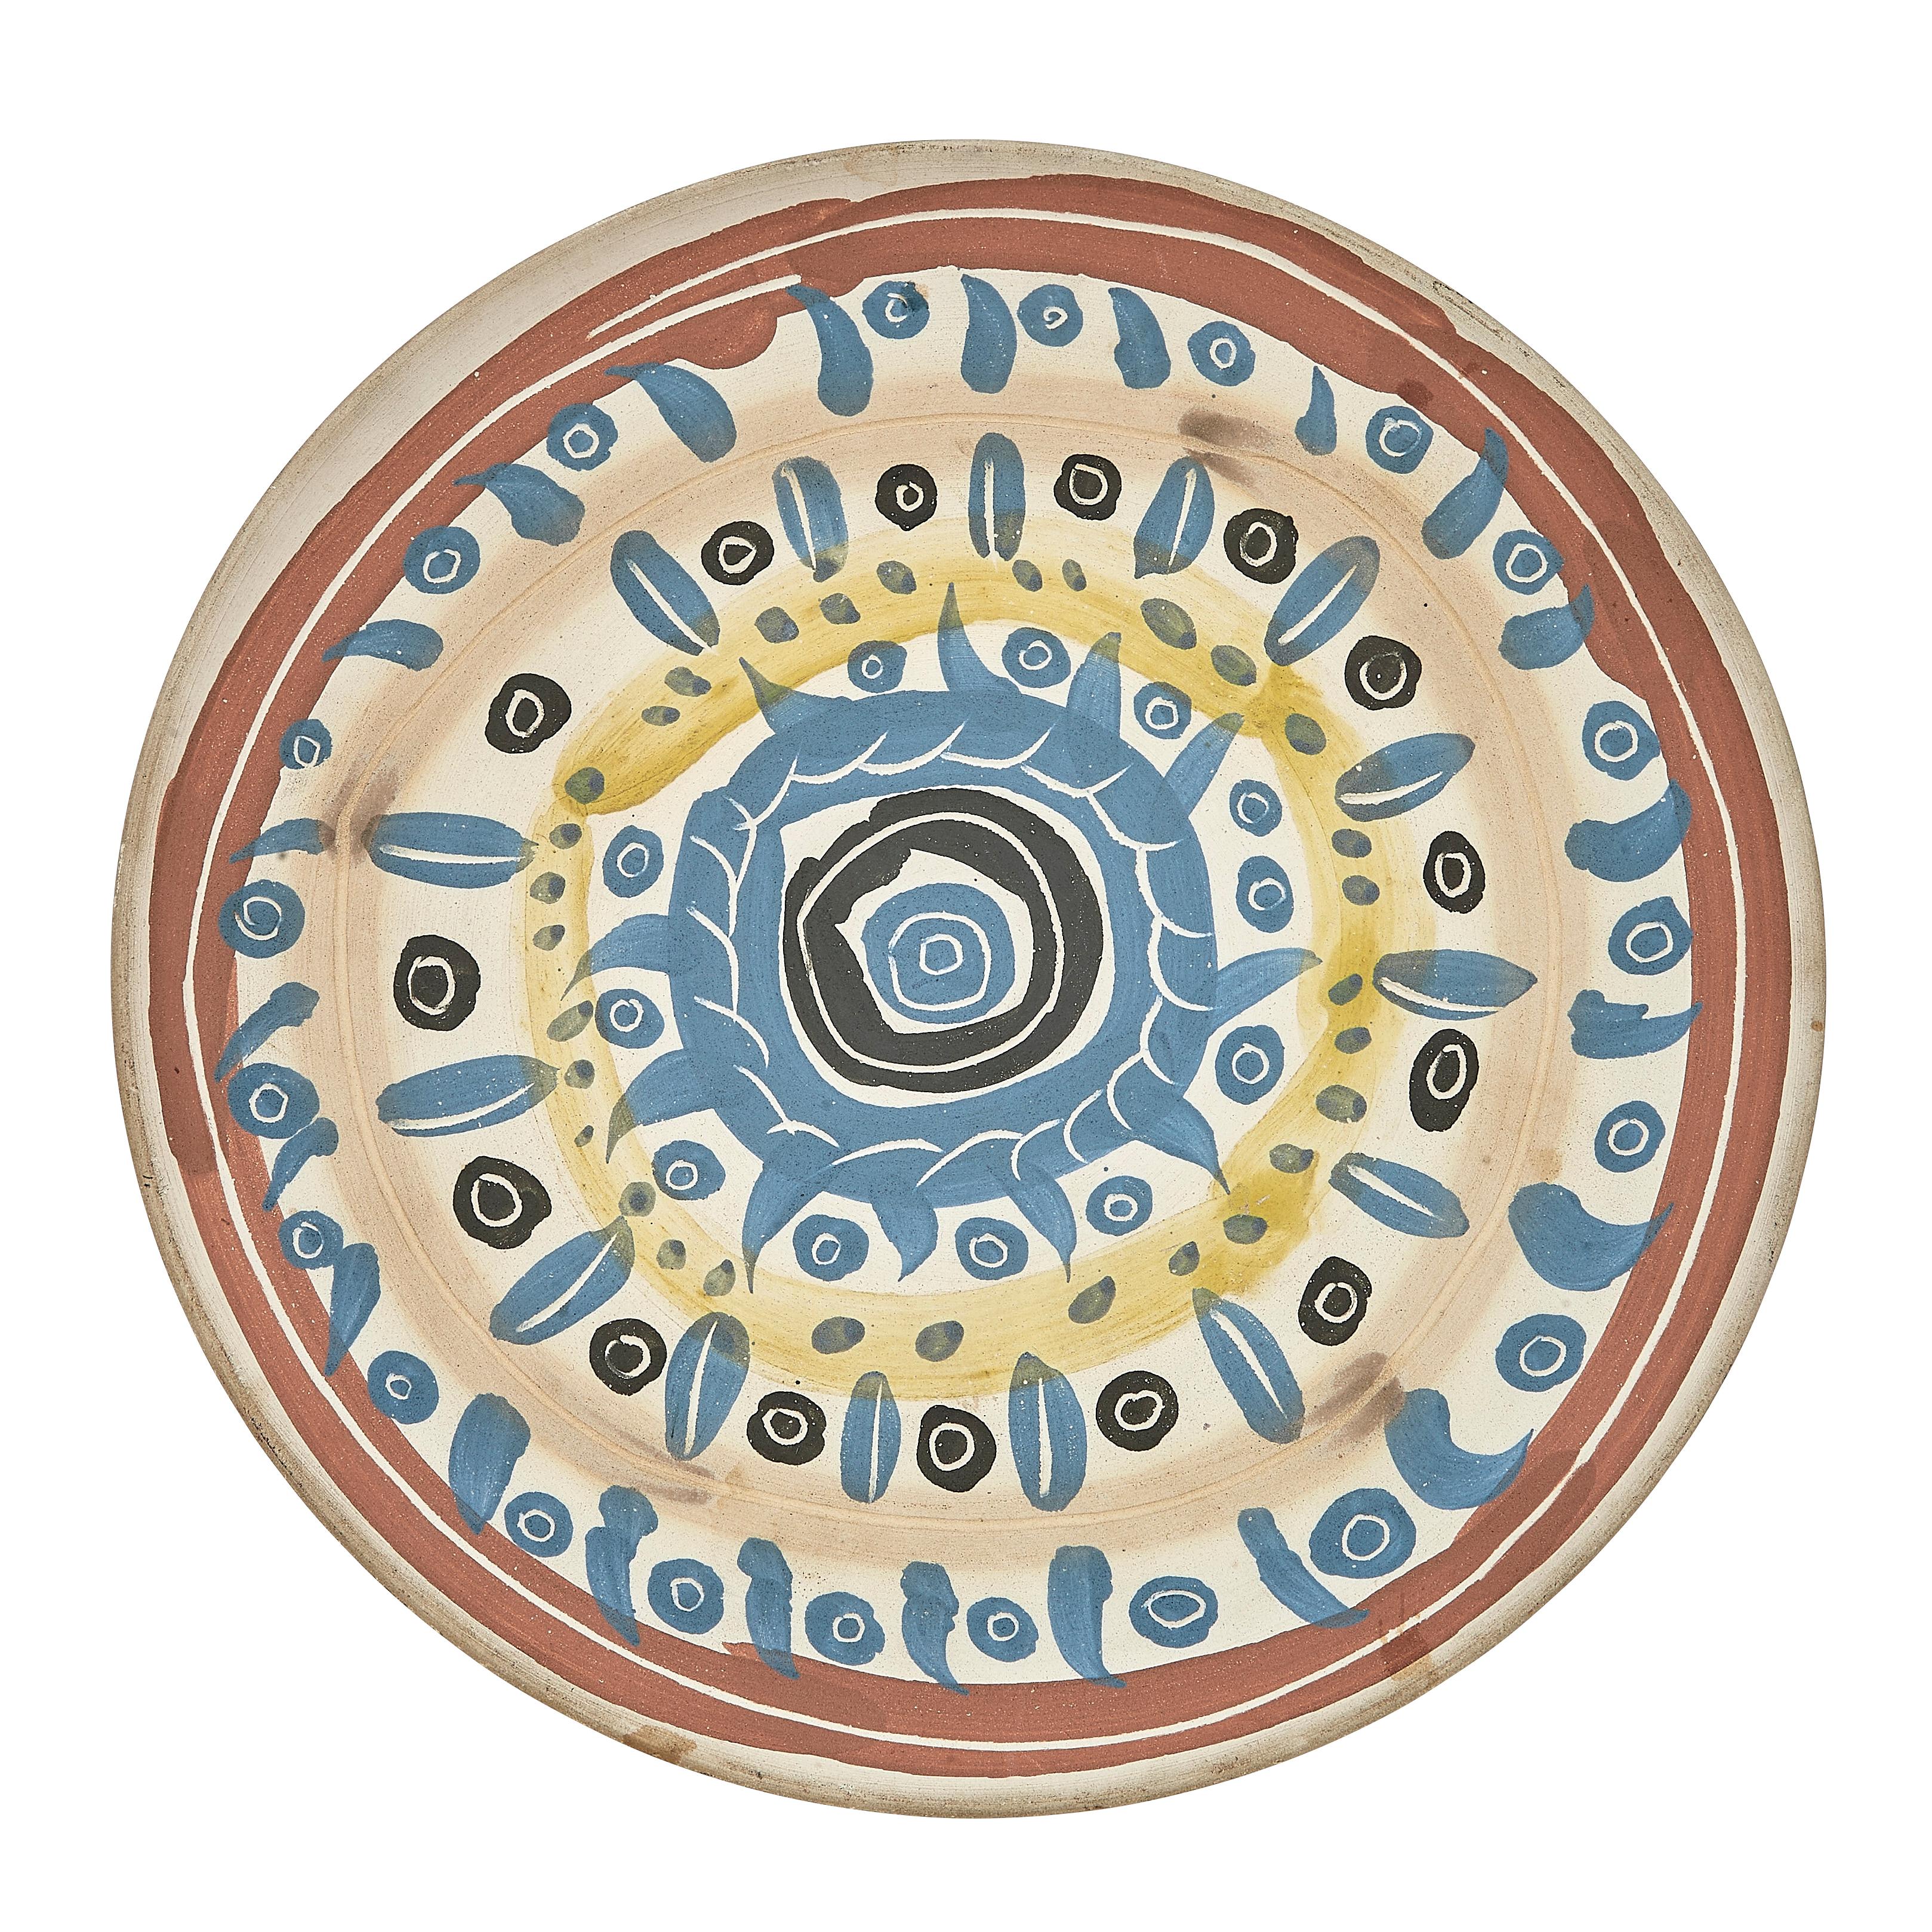 Pablo Picasso 'Motif spiralé' (A. R. 404) Motif Spiral Madoura Plate 1957